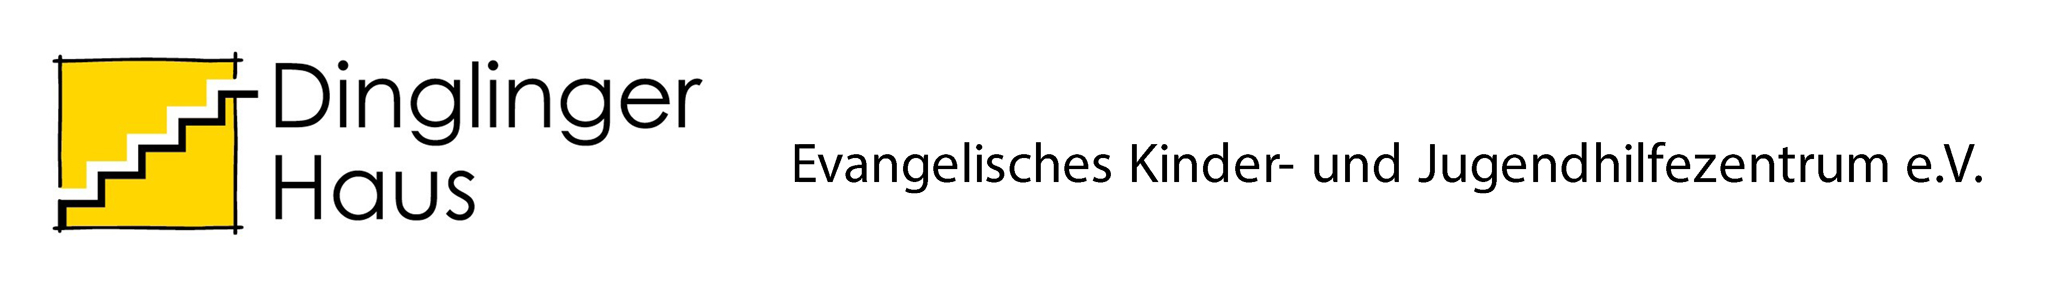 Logo Dinglinger Haus